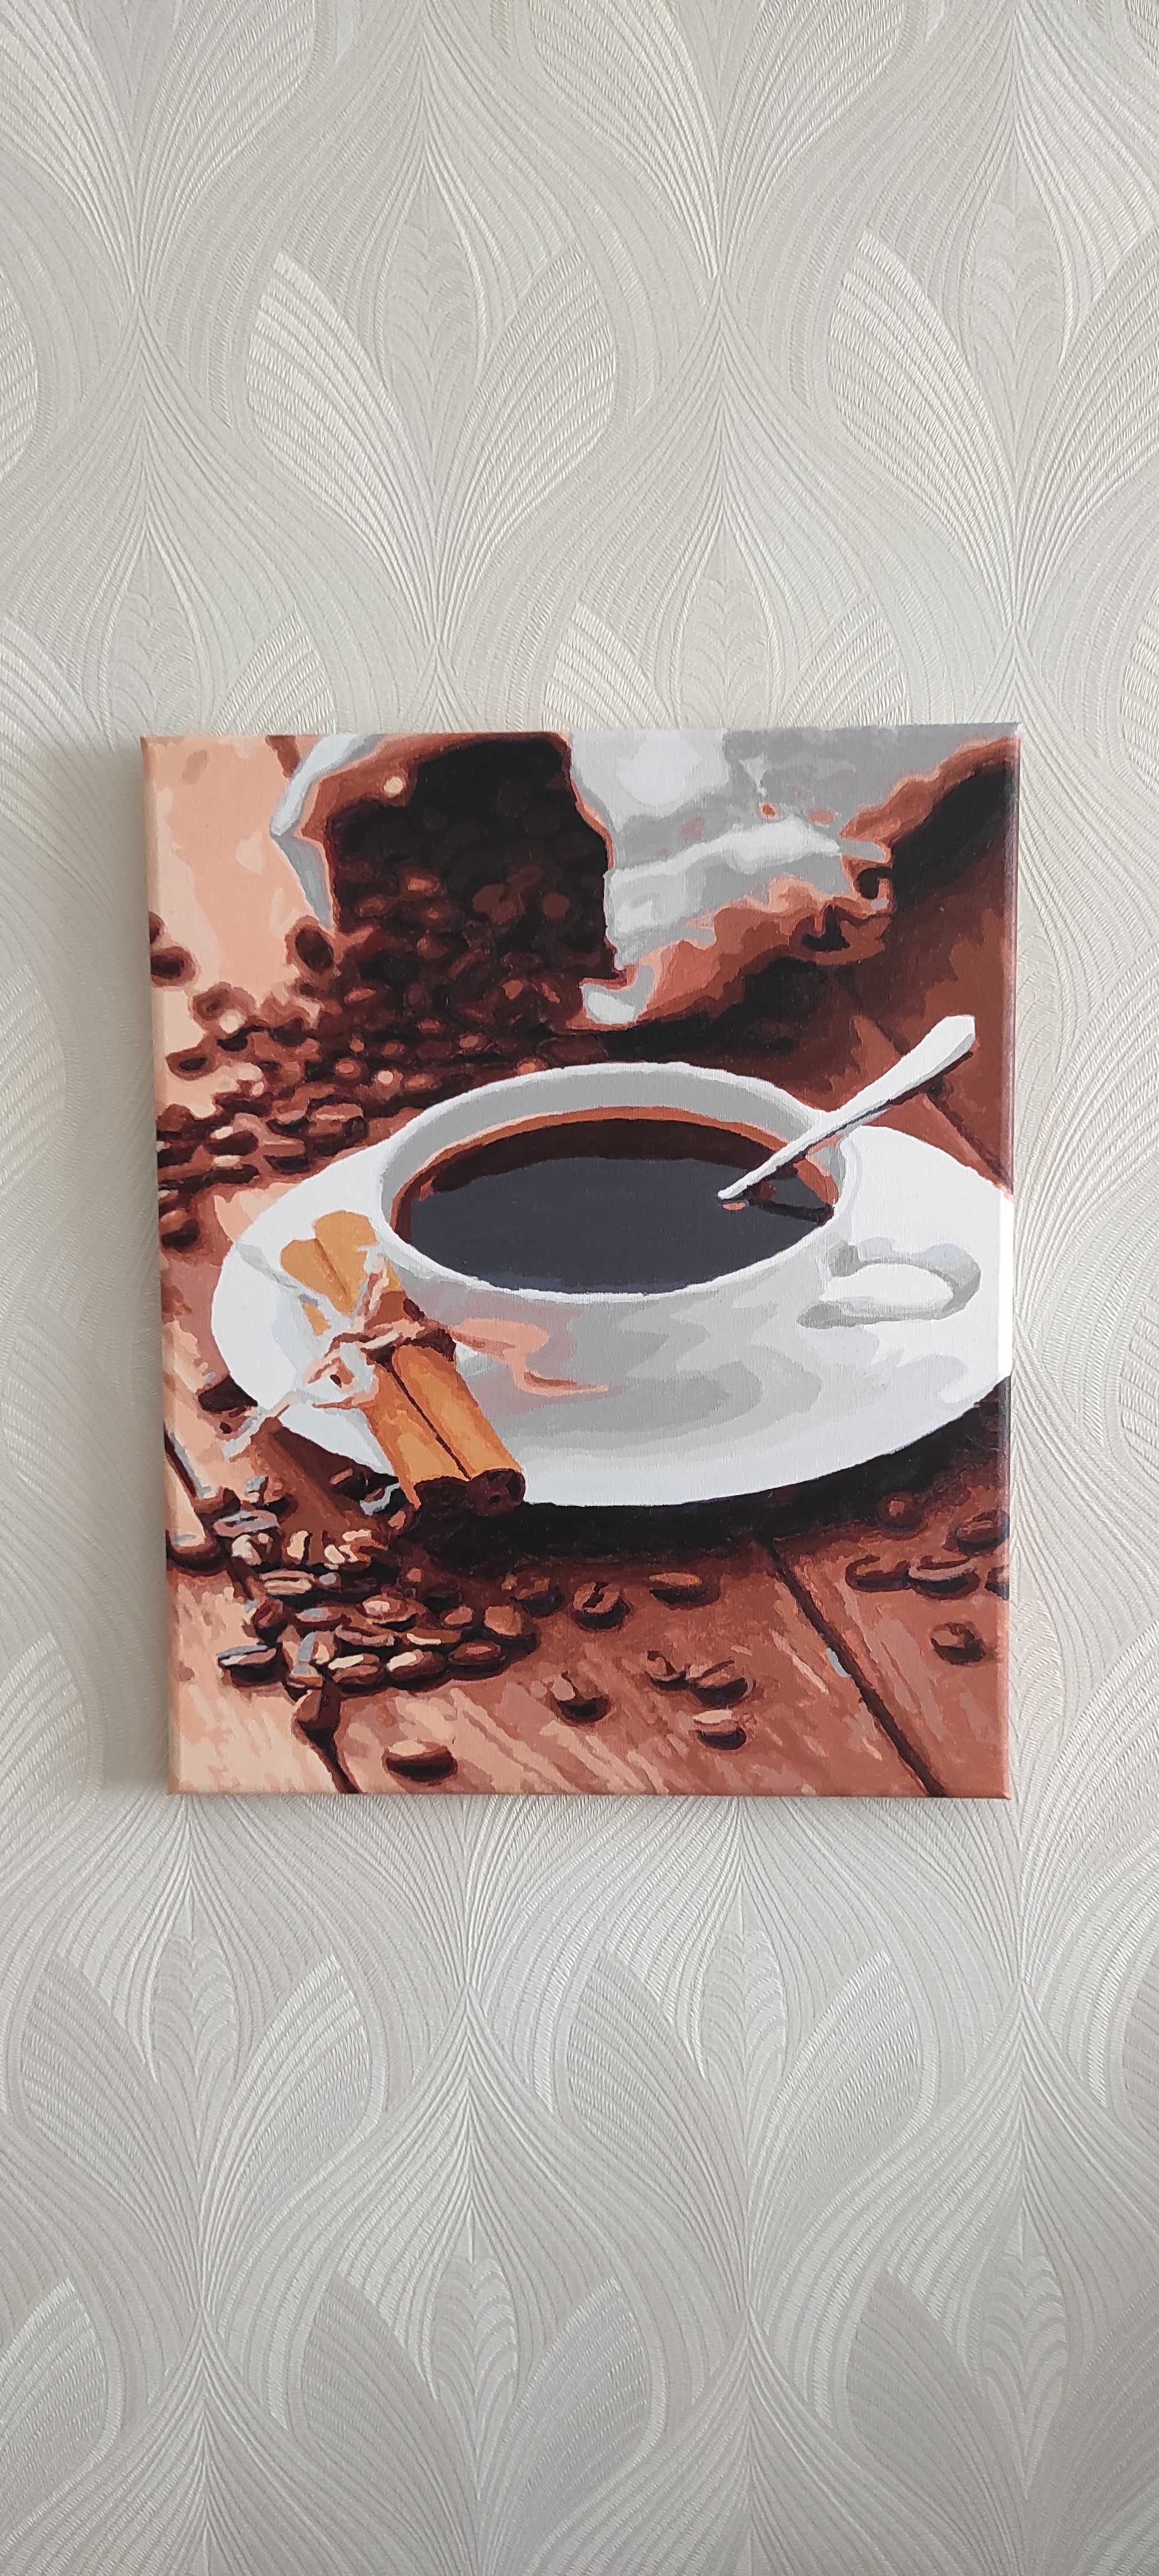 Картина "Ранкова кава с корицею" намальована фарбами .